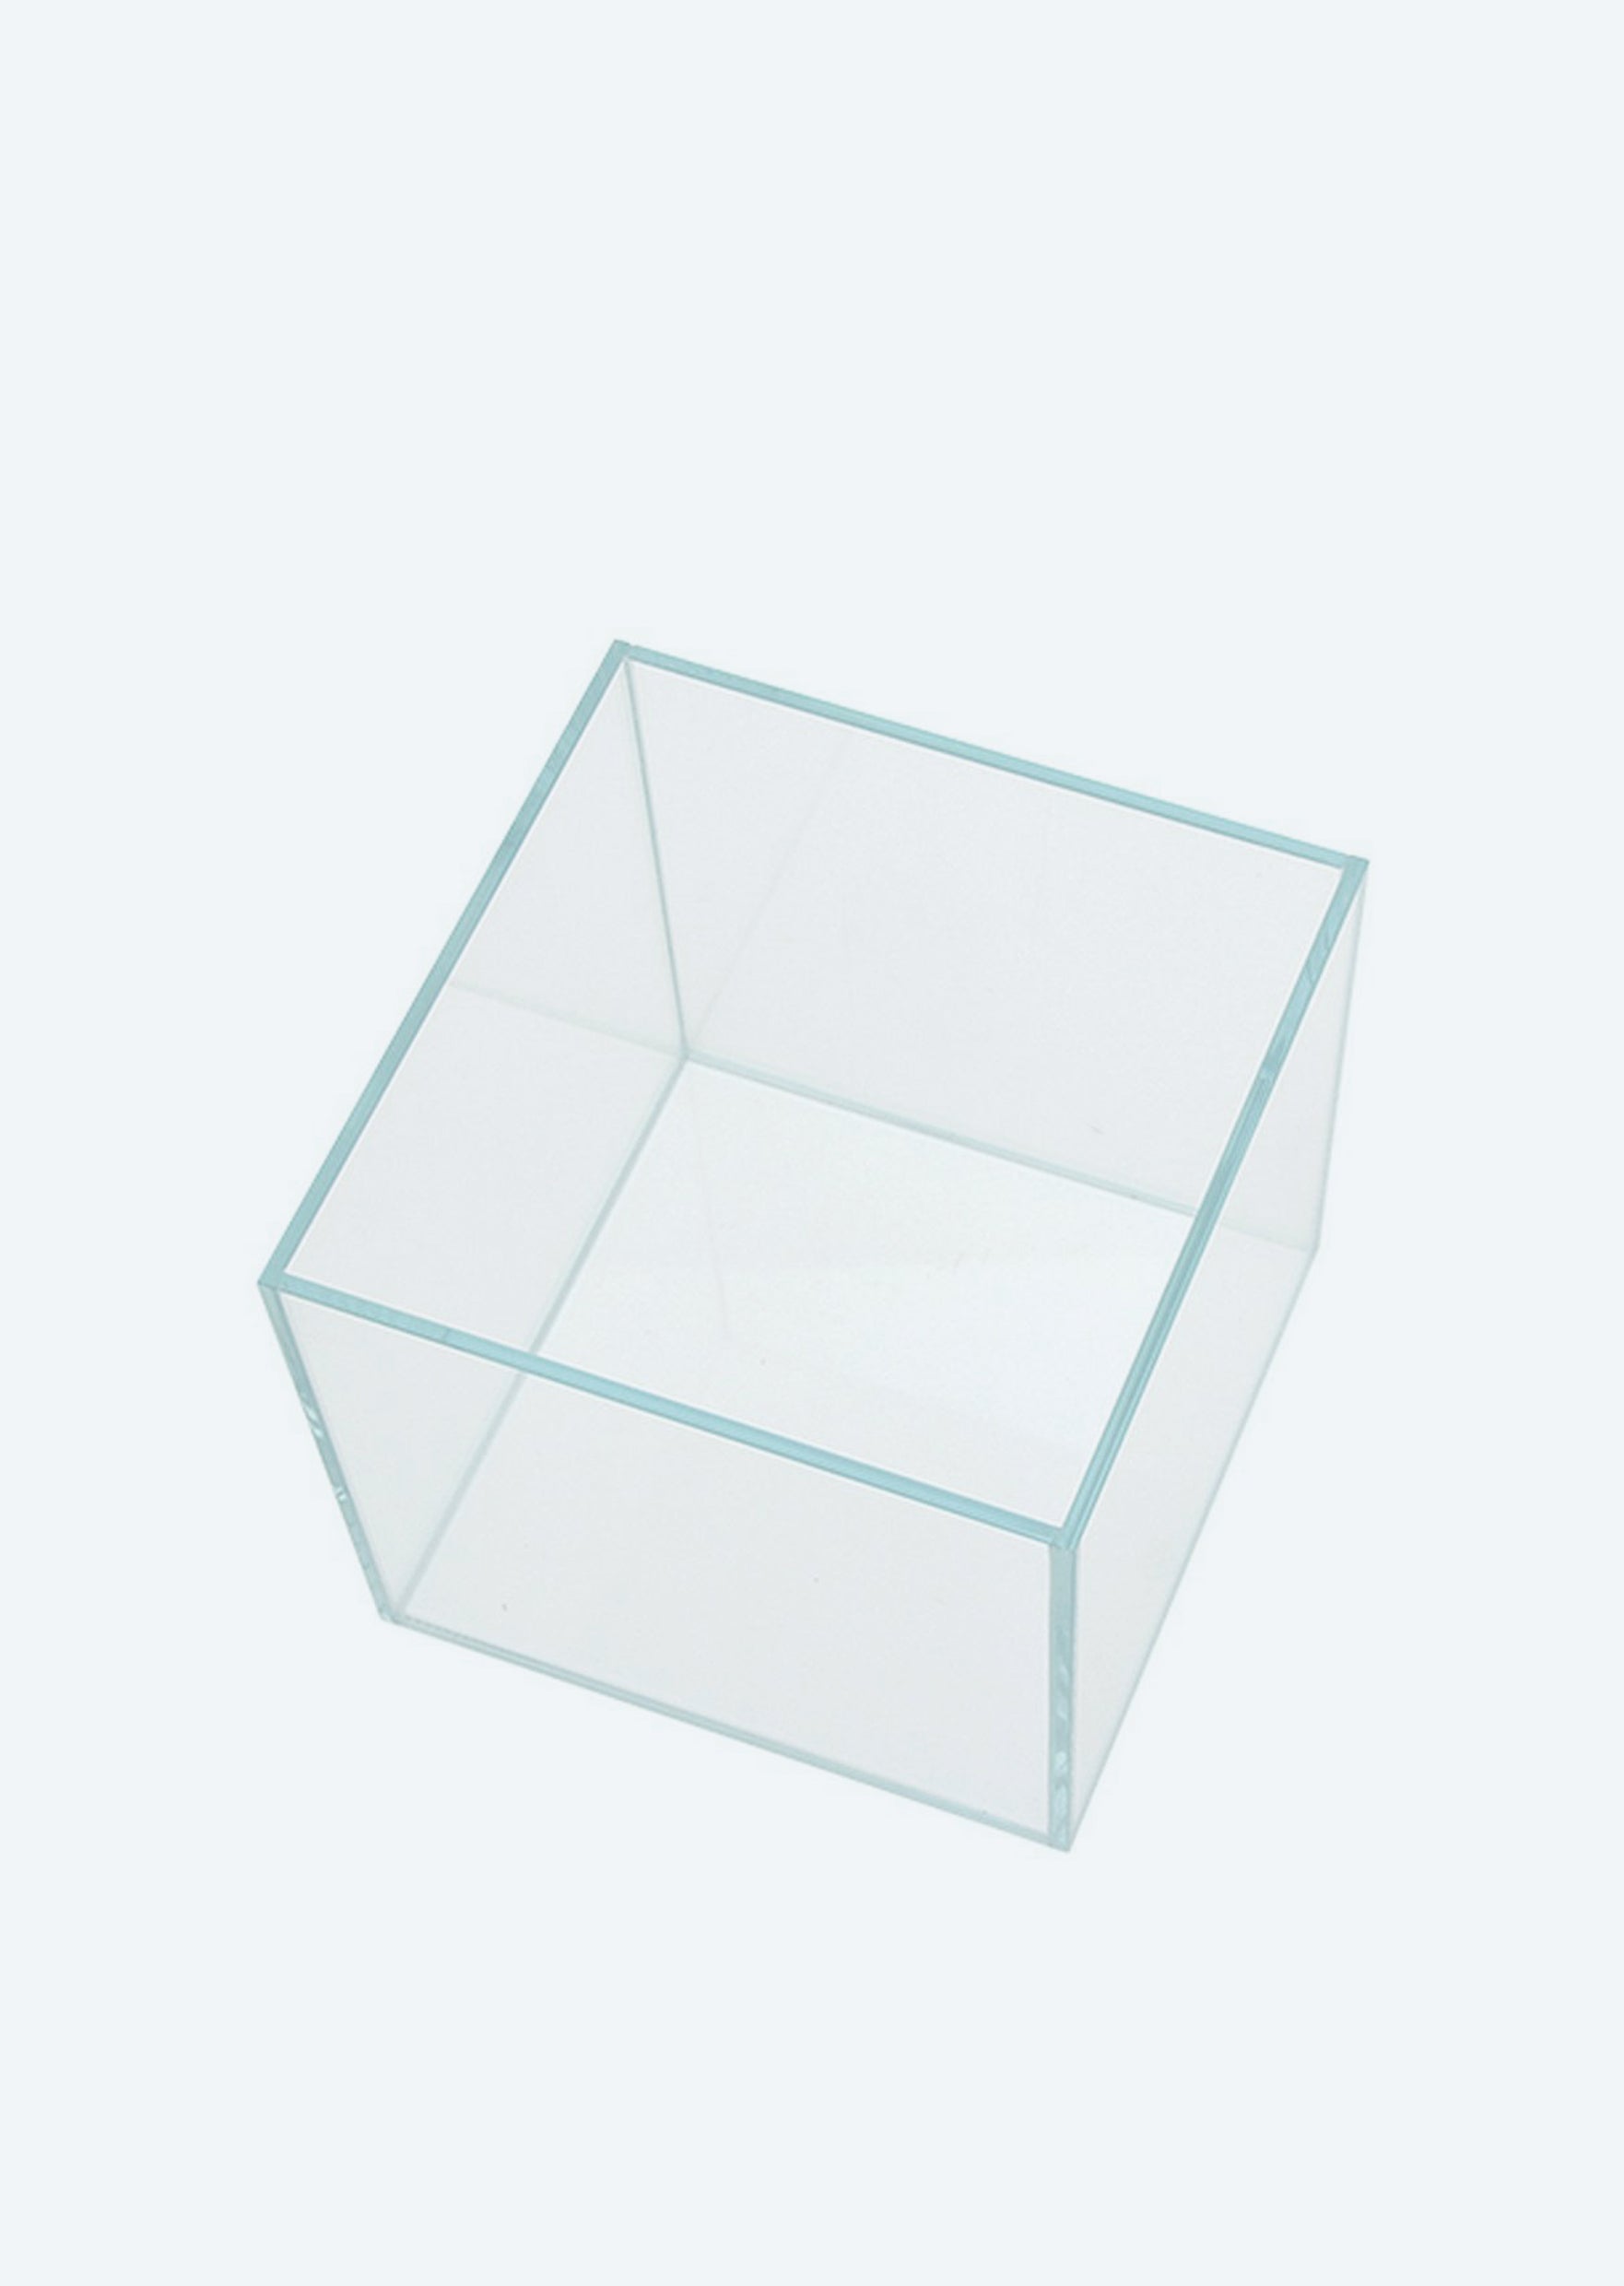 $399.99 - 45G Rimless Cube